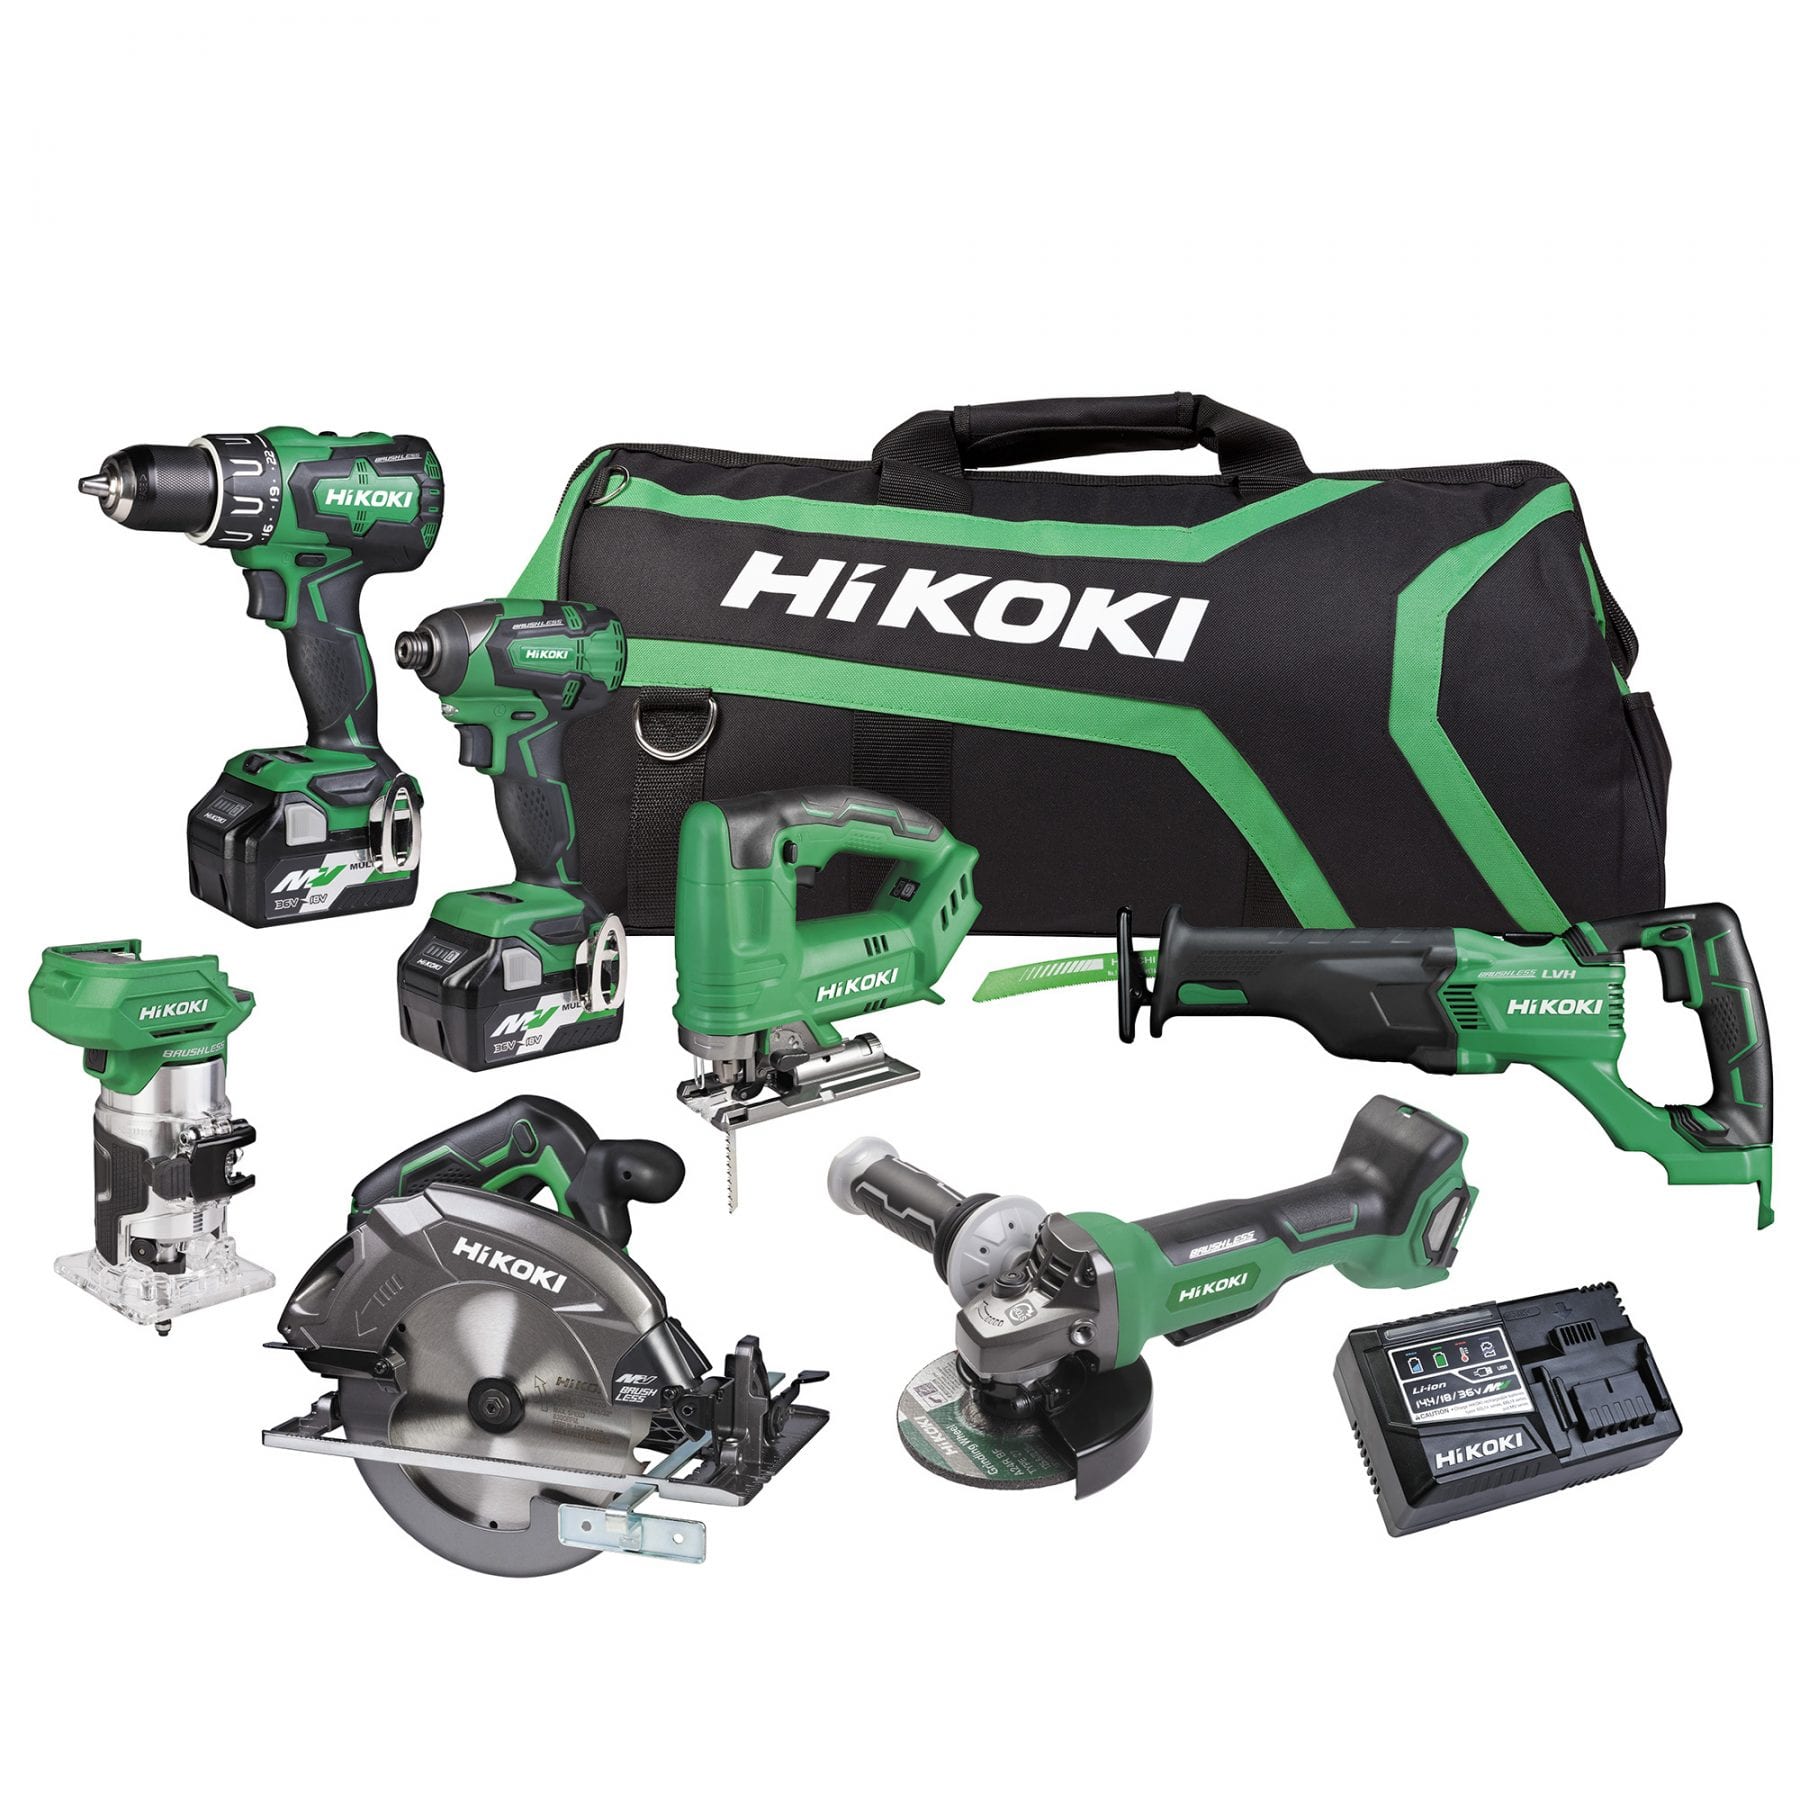 HiKOKI Power Tools UK popular brushless twin pack kits now